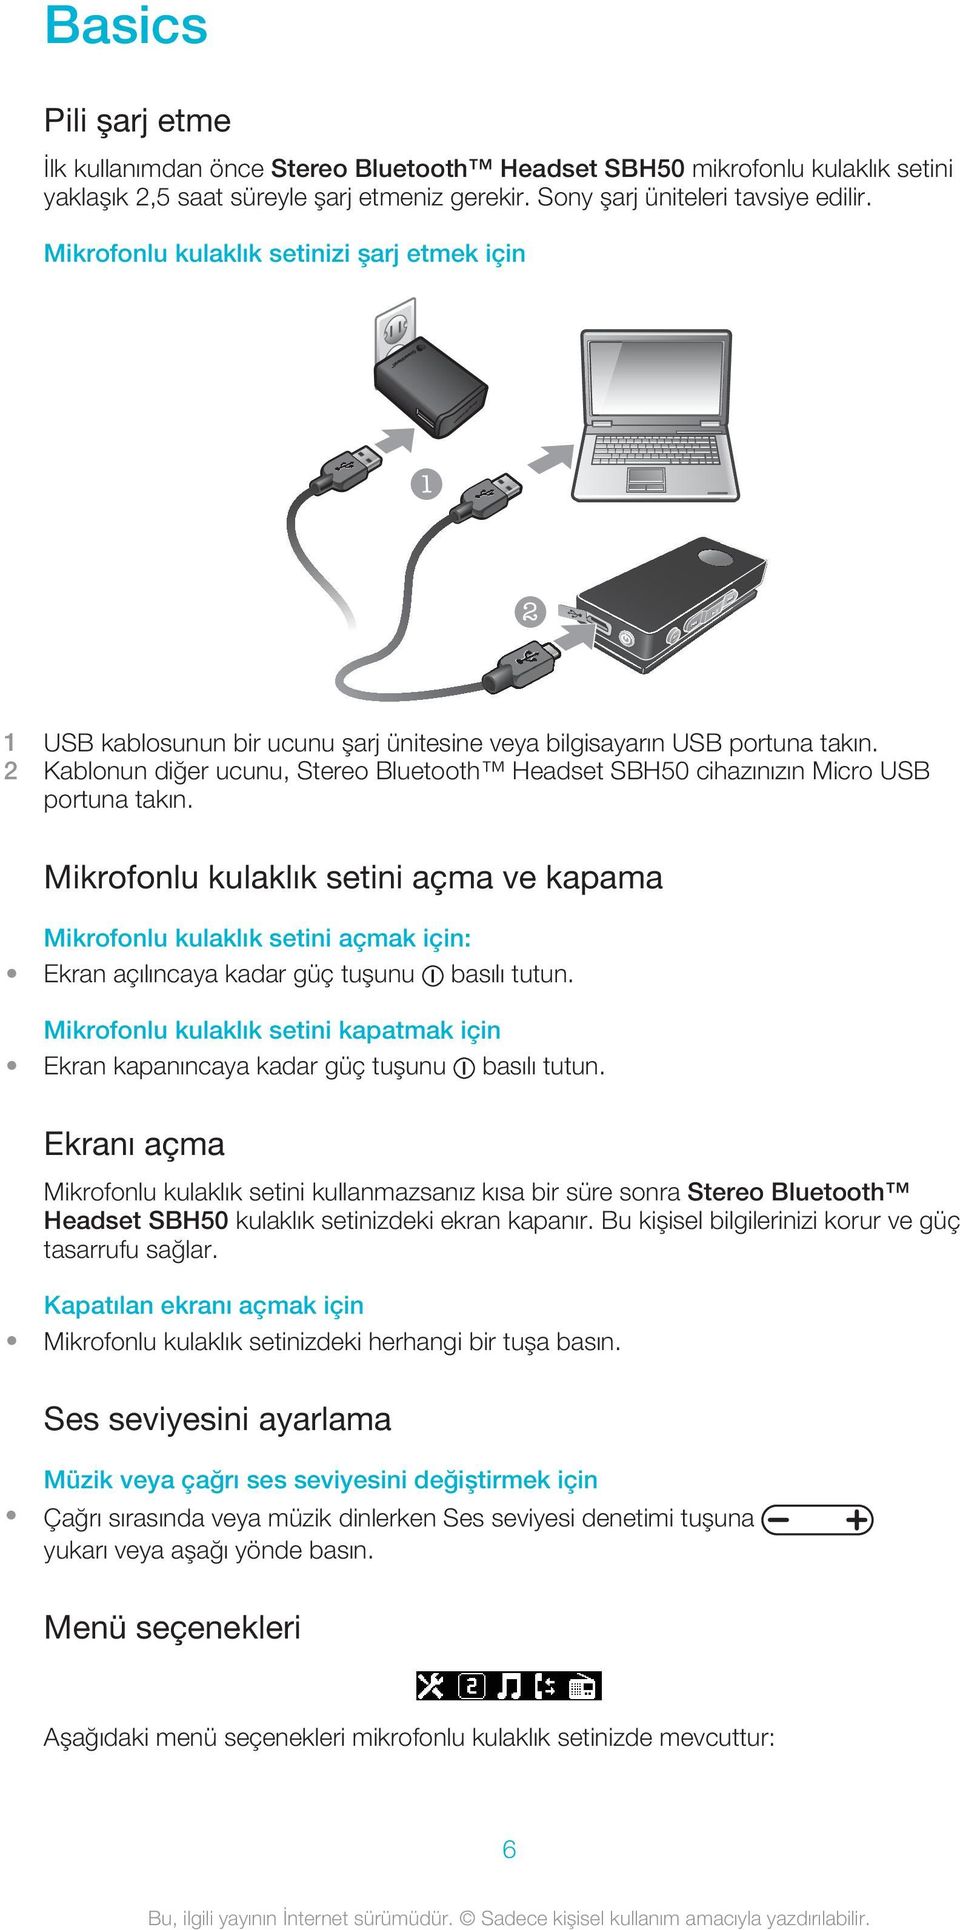 2 Kablonun diğer ucunu, Stereo Bluetooth Headset SBH50 cihazınızın Micro USB portuna takın.